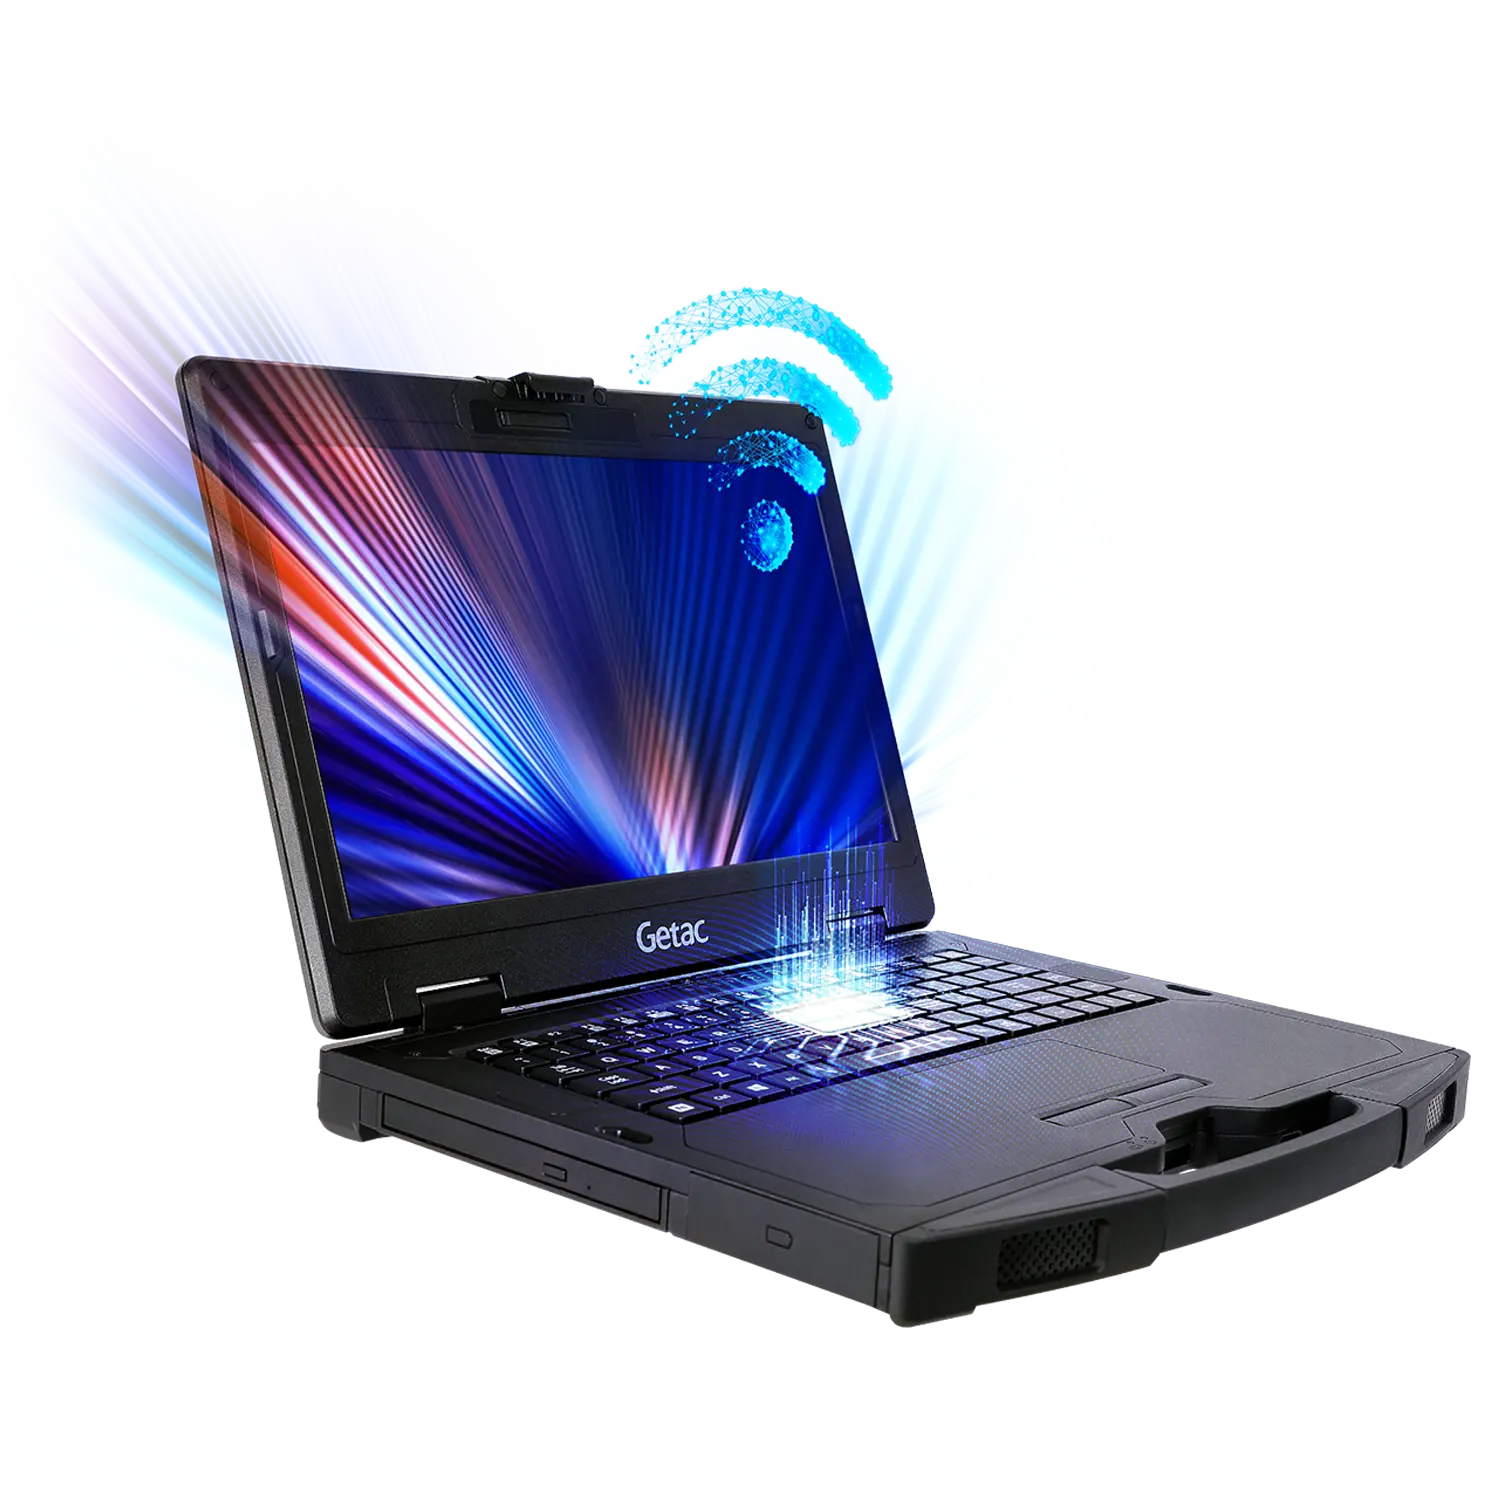 S410 Getac-notebook kasar untuk dalam dan luar ruangan, prosesor i5 atau i7 generasi ke-13, 14 "multi-sentuh.